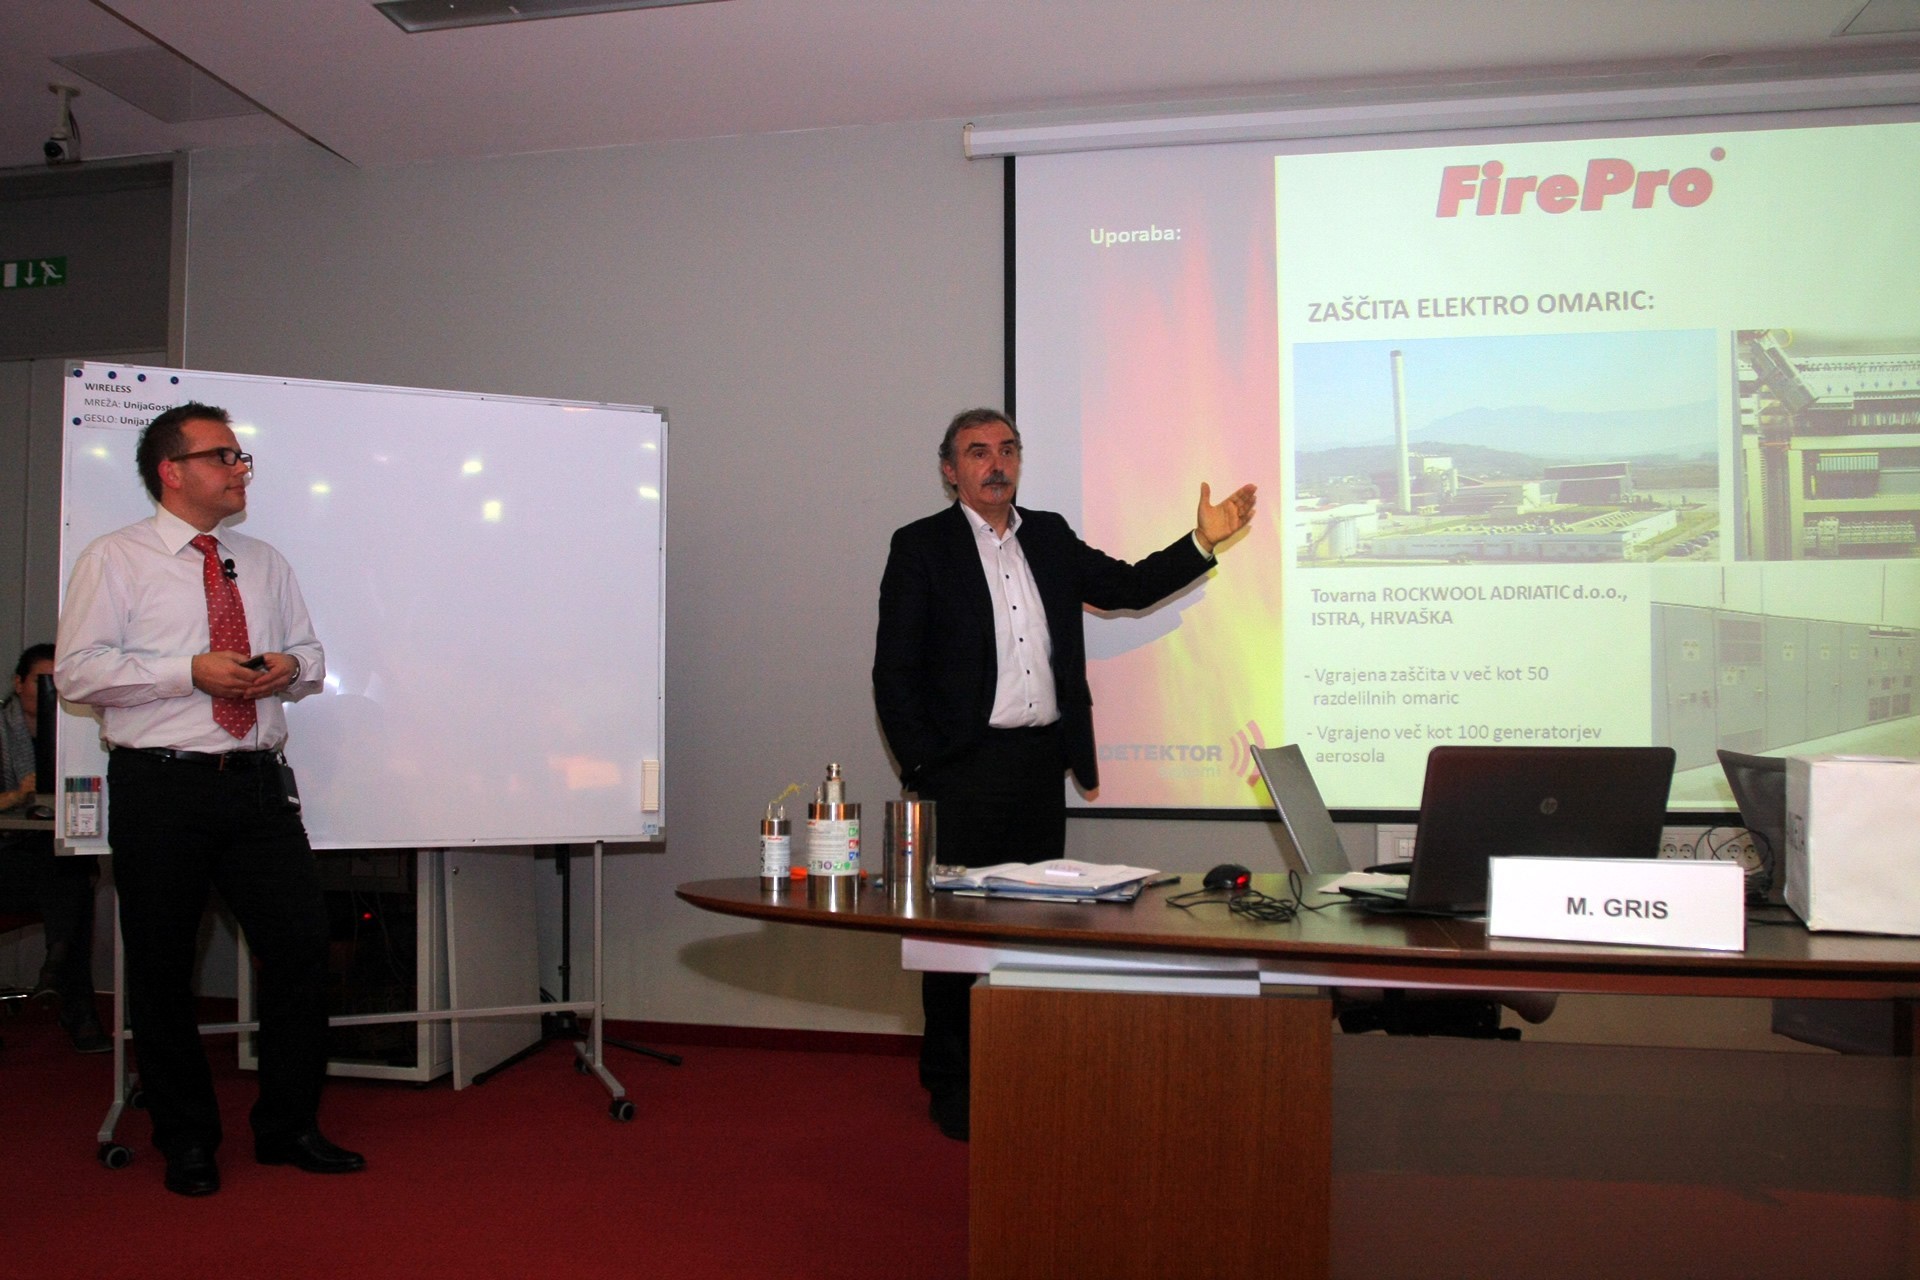 DB Technic represents FirePro in Slovenia